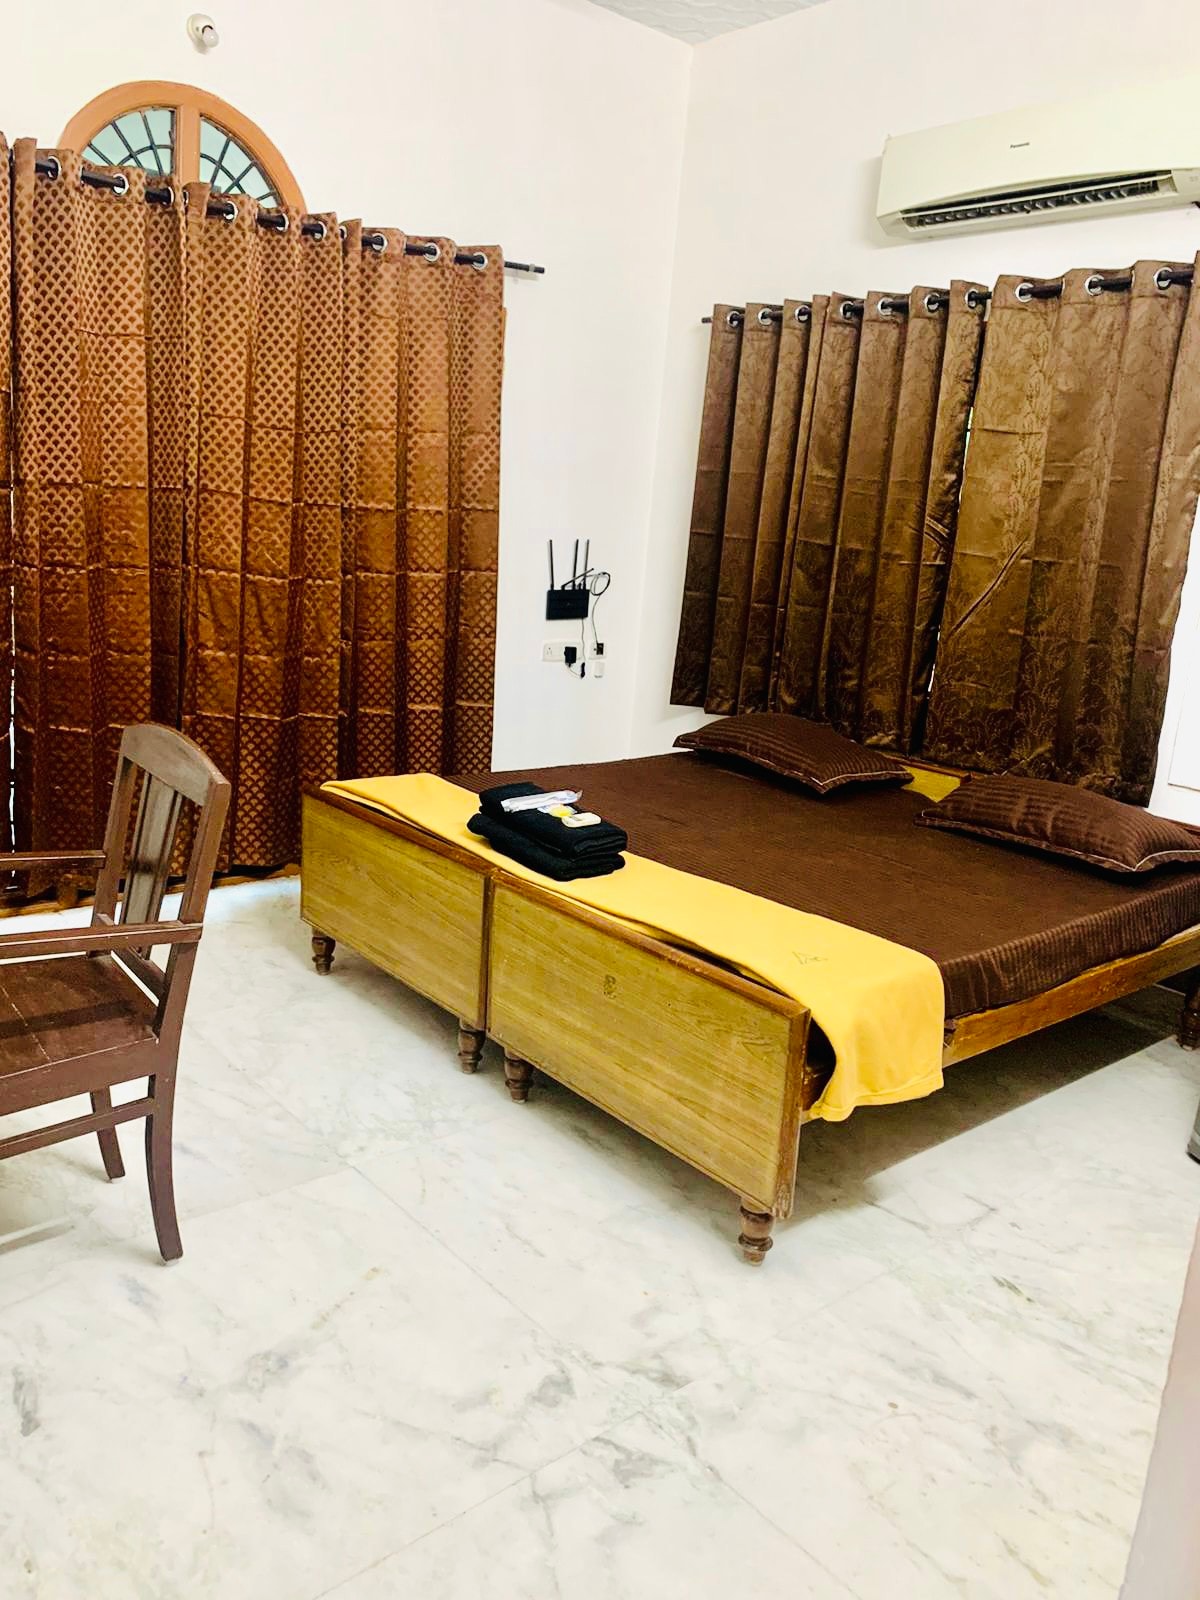 (KOD 4) - One bedroom renovated home- Kodambakkam